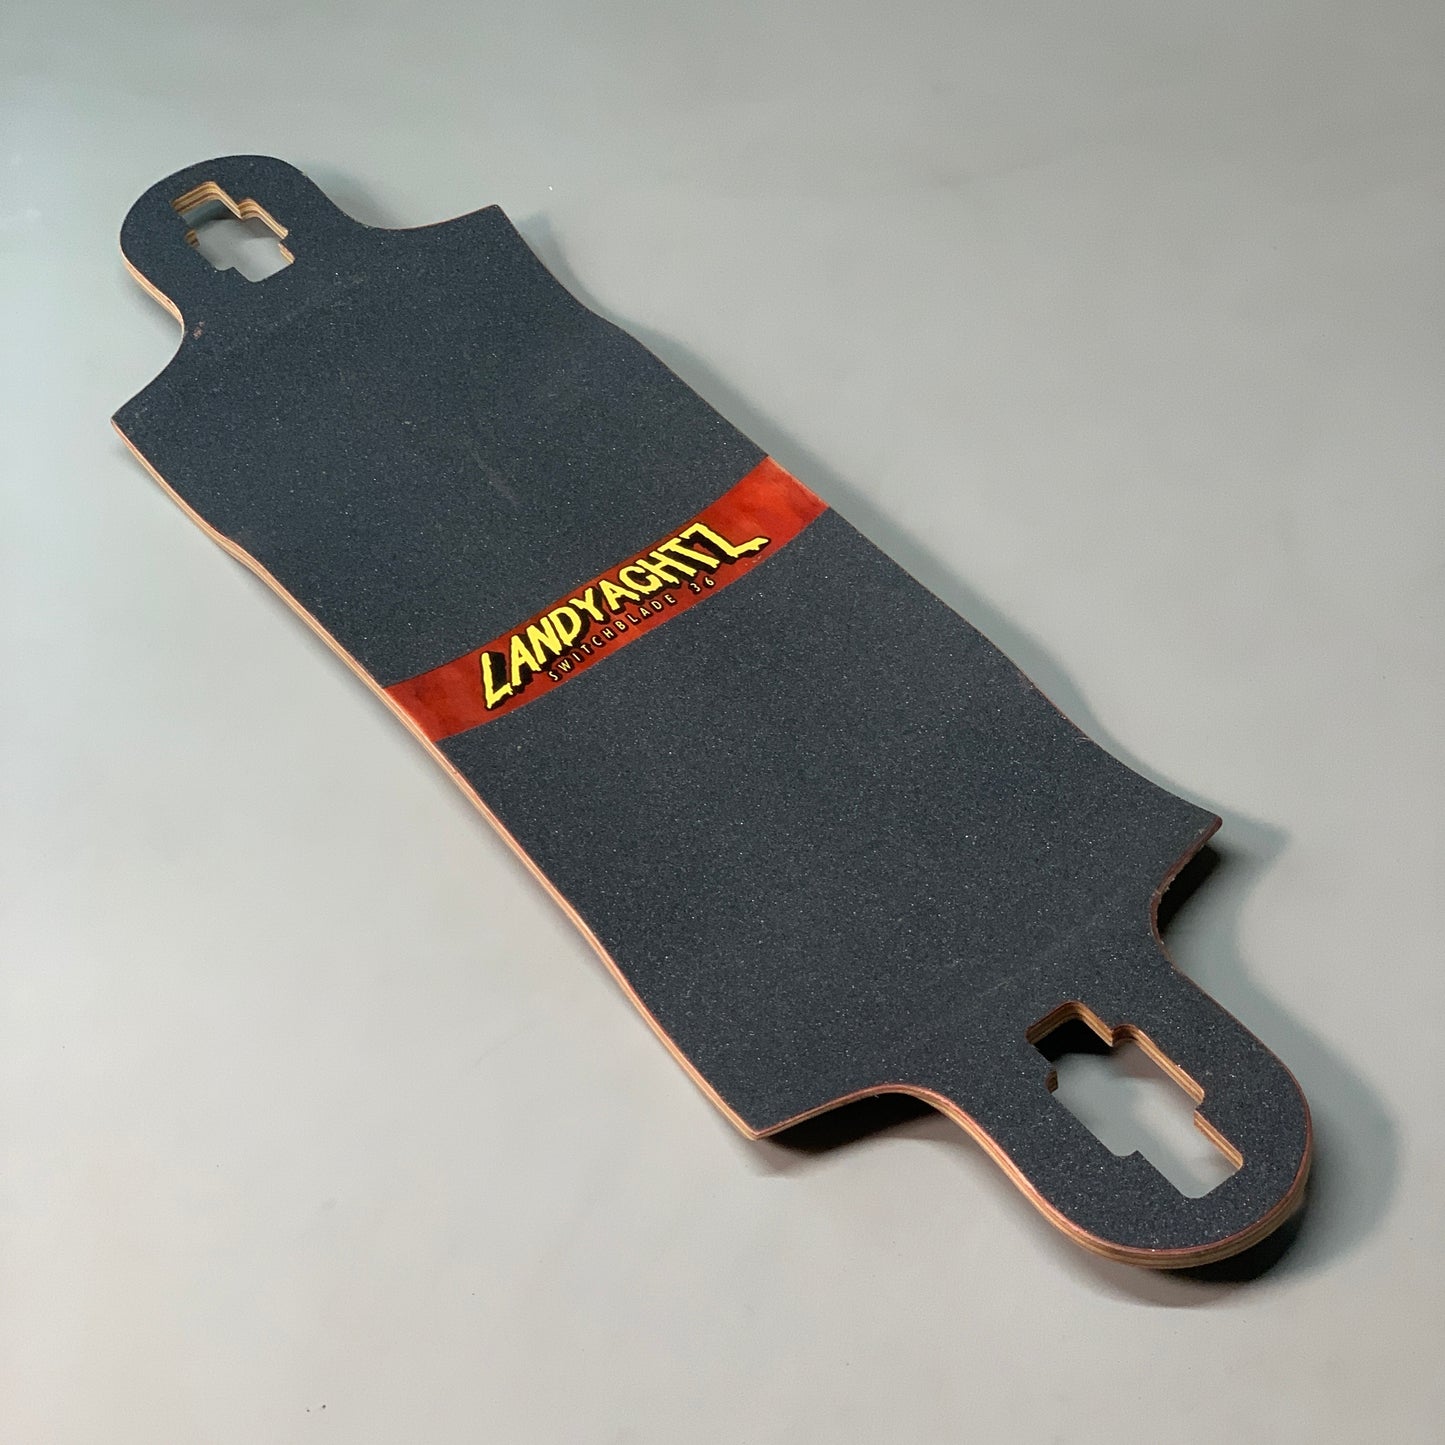 LANDYACHTZ Switchblade 36 Tropic Red/Orange/Blue Longboard Deck w/ Grip Tape 36"x9.5" (New Other)